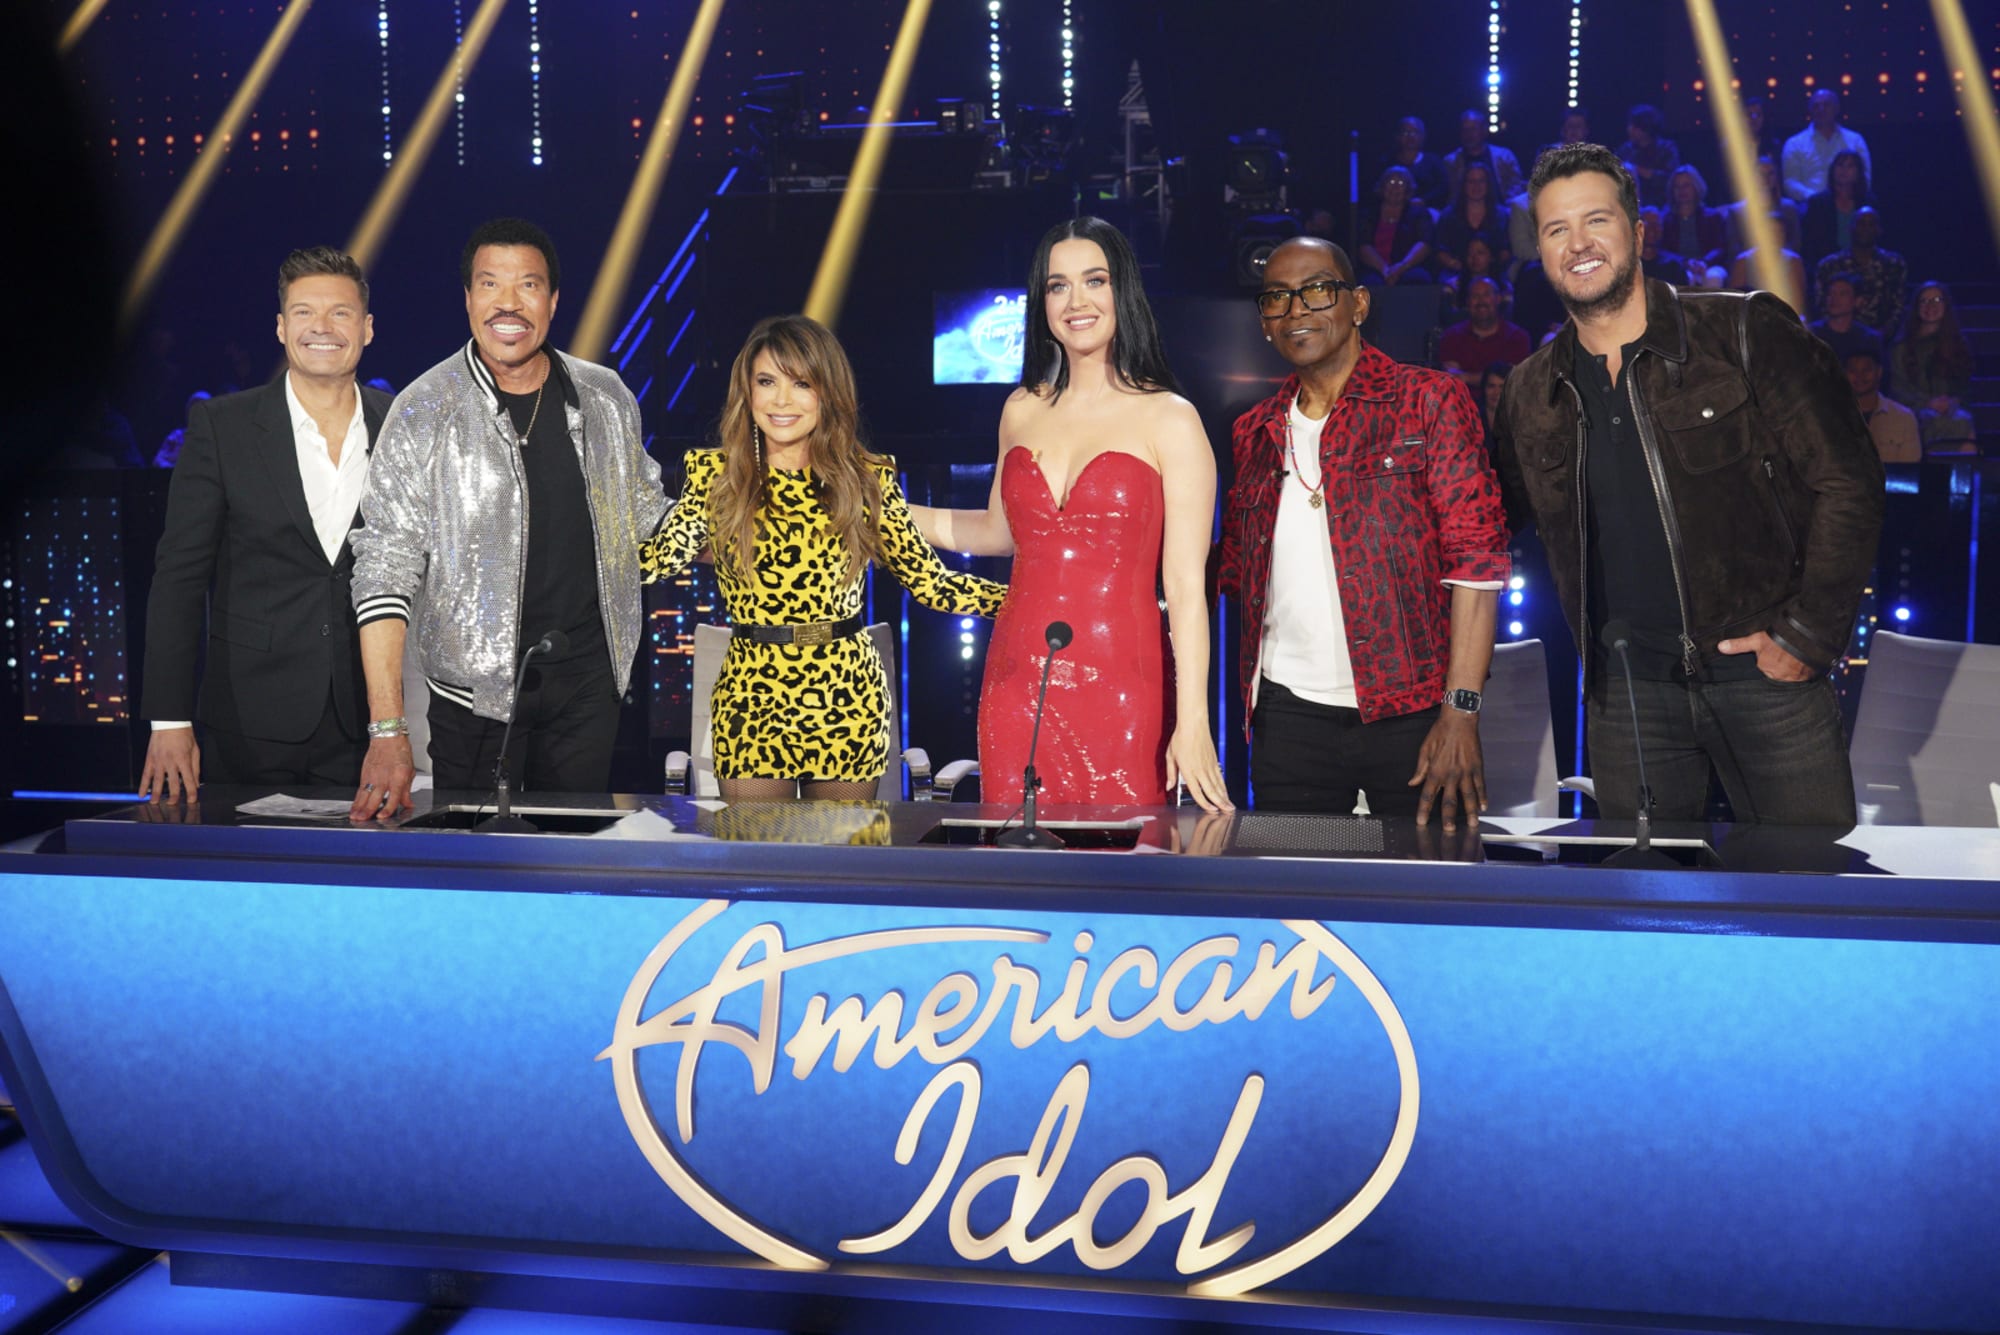 American Idol 2022: Did anyone go home tonight?